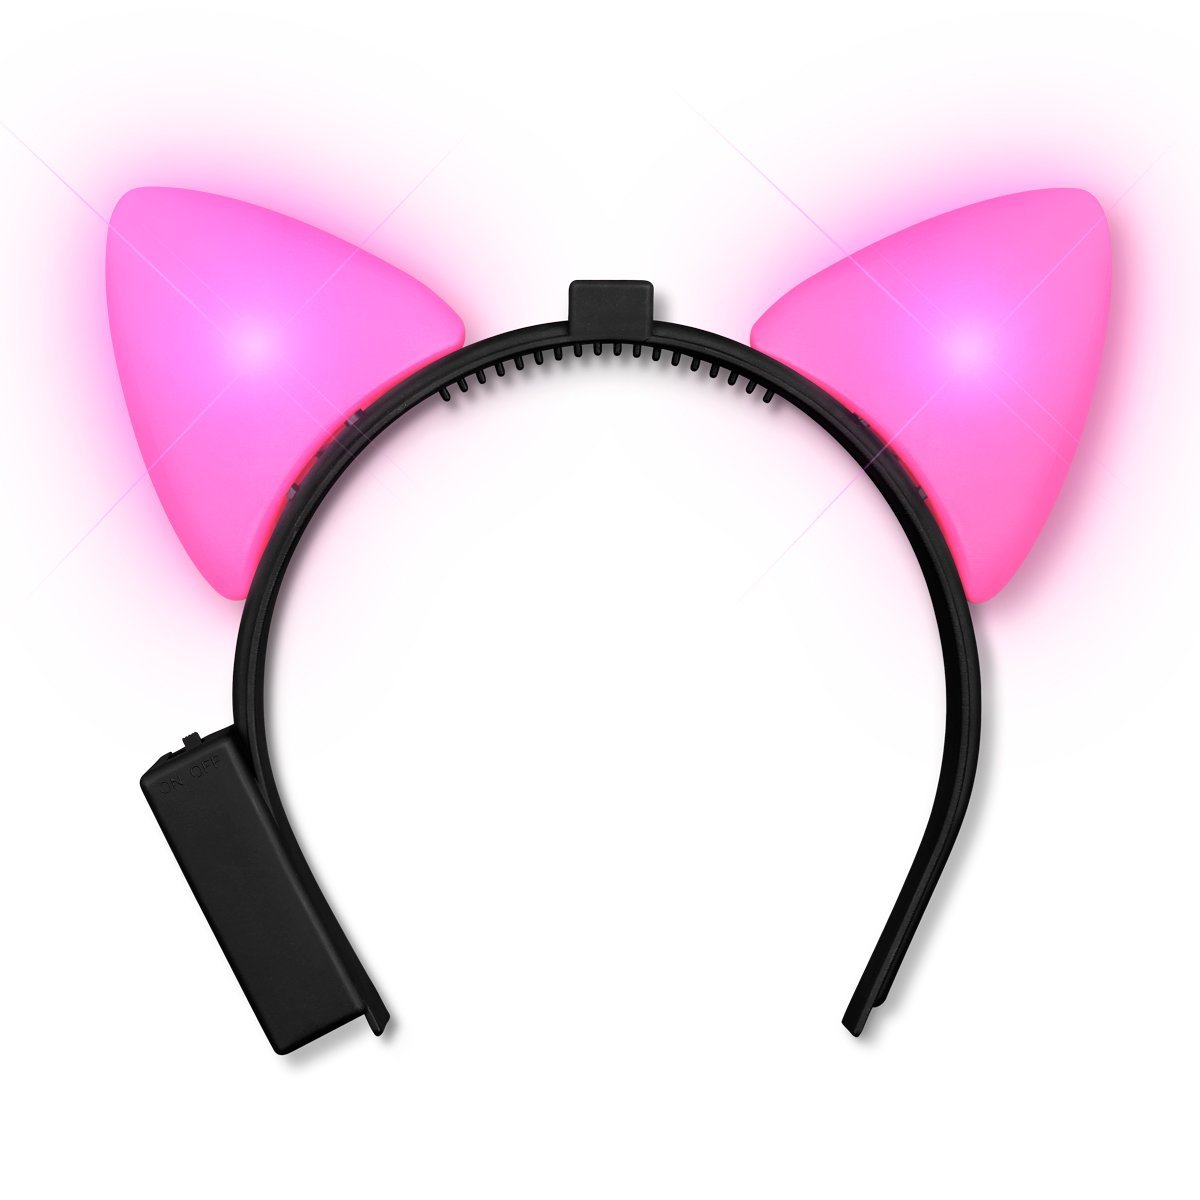 LED Animal Ears Steady Pink Light Headband All Products 3